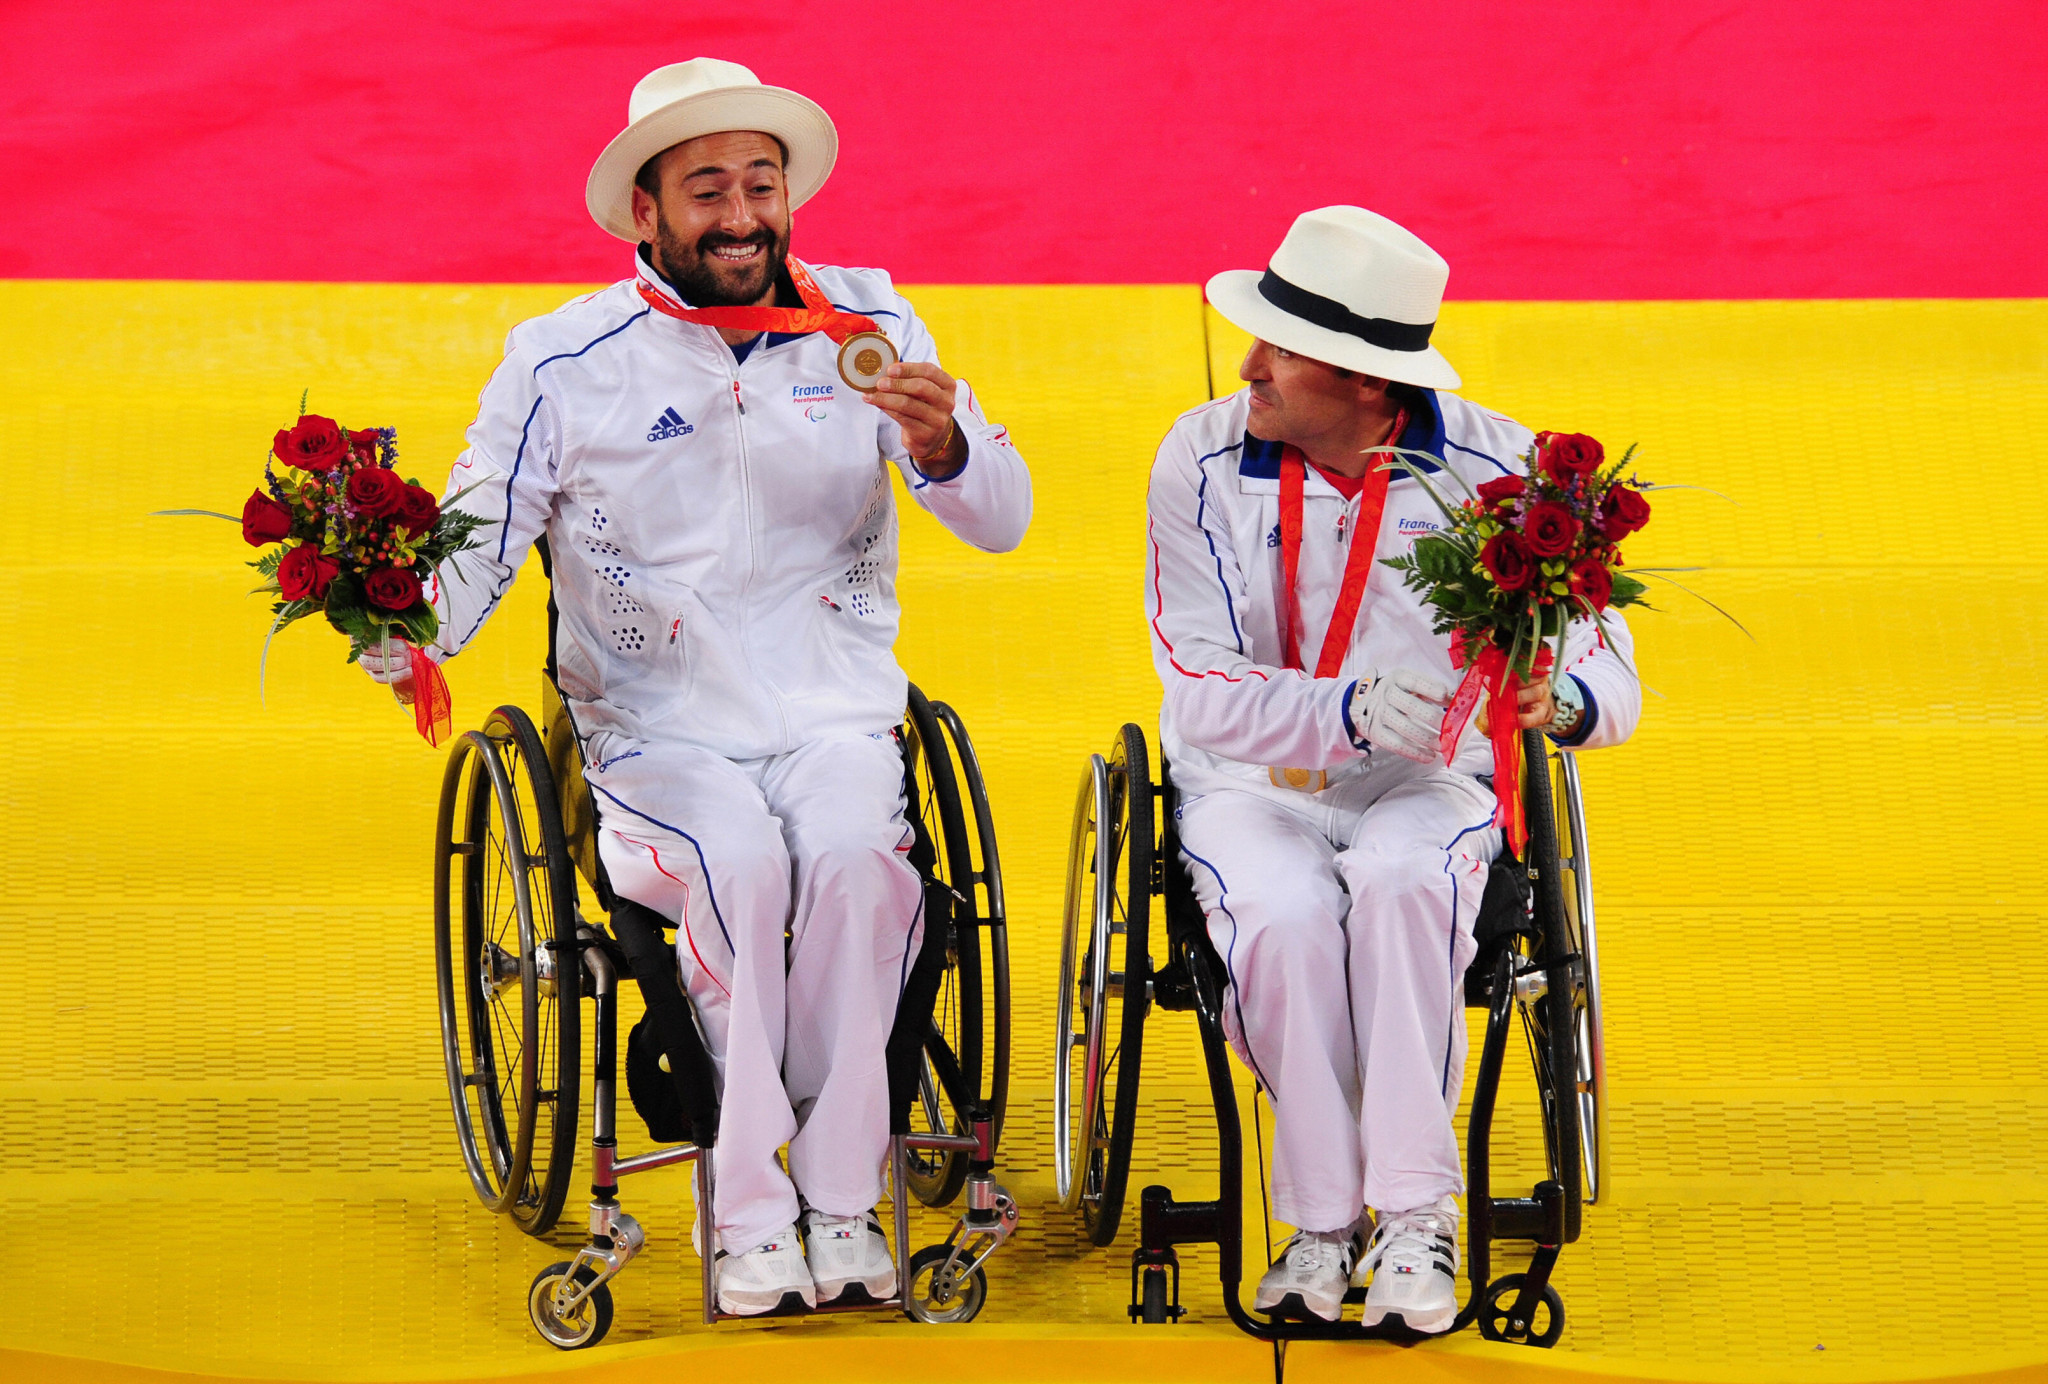 Michaël Jérémiasz earned Paralympic gold at Beijing 2008 alongside Stéphane Houdet ©Getty Images